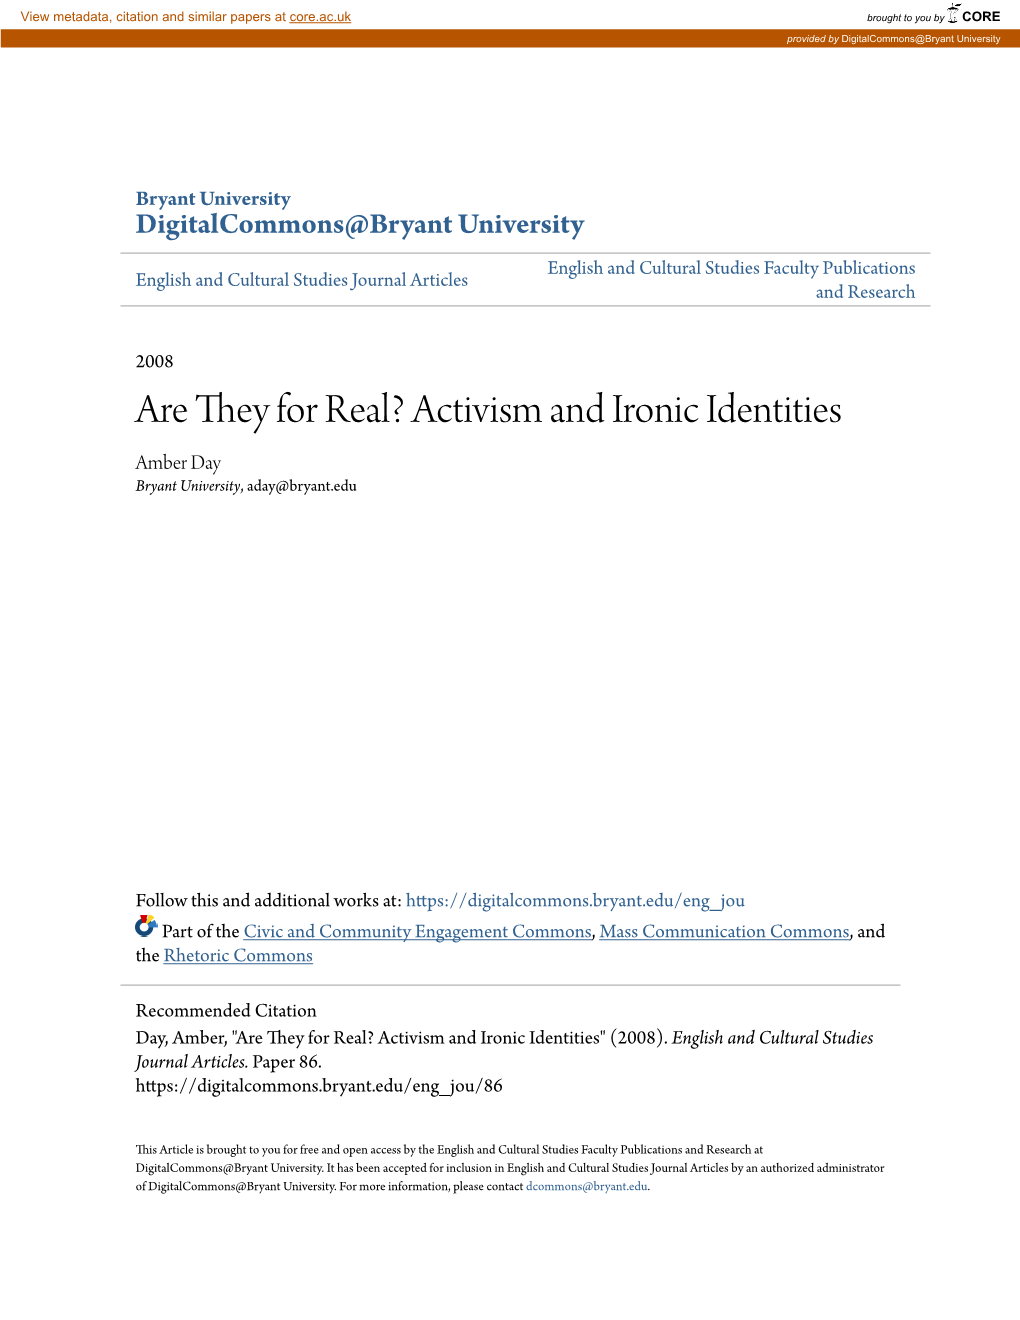 Activism and Ironic Identities Amber Day Bryant University, Aday@Bryant.Edu